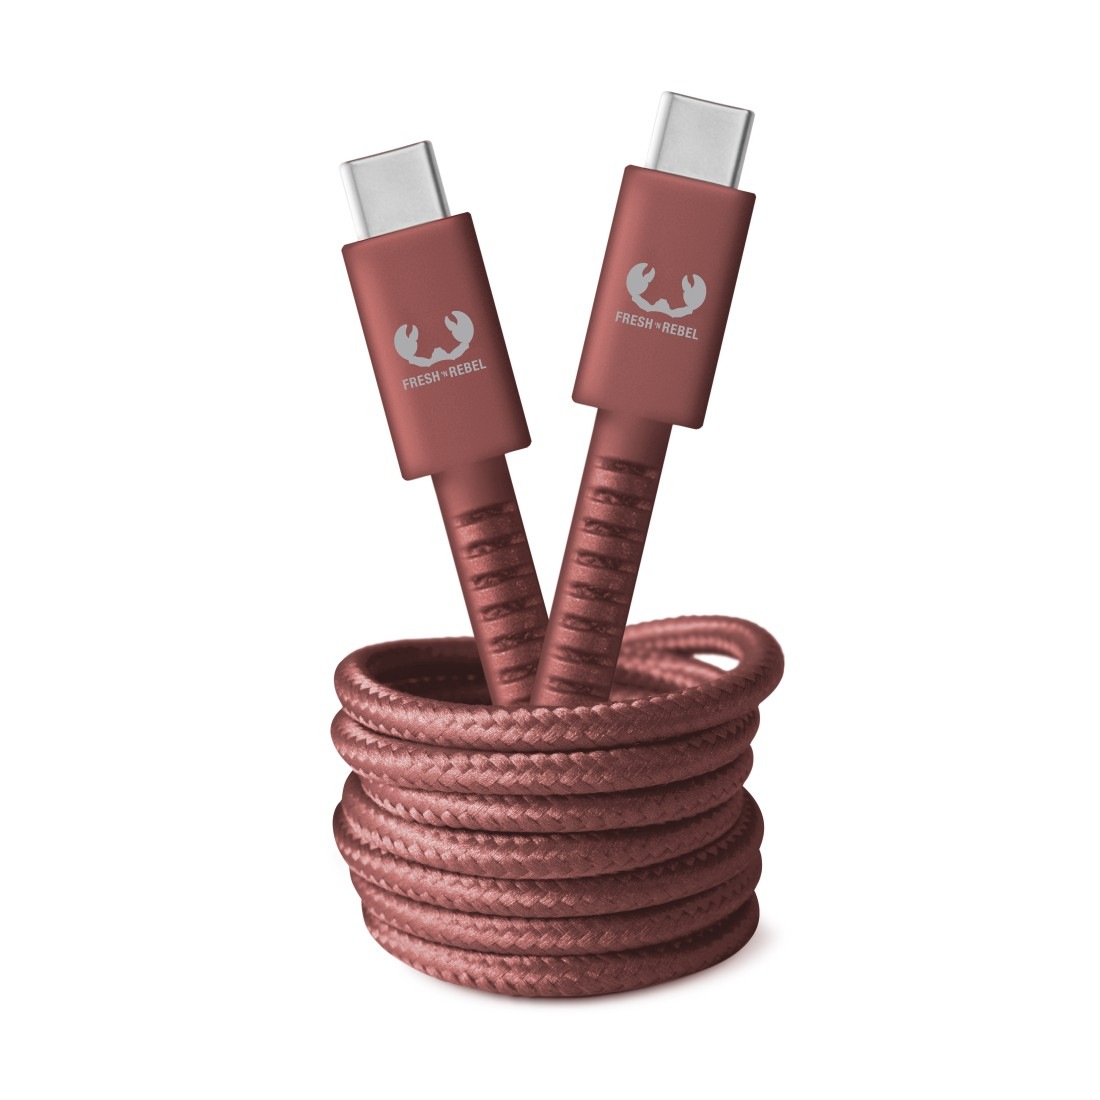 Fresh´n Rebel Smartphone-Kabel »USB-C - USB-C Kabel "Fabriq", 2m«, USB Typ C-USB Typ C, 200 cm